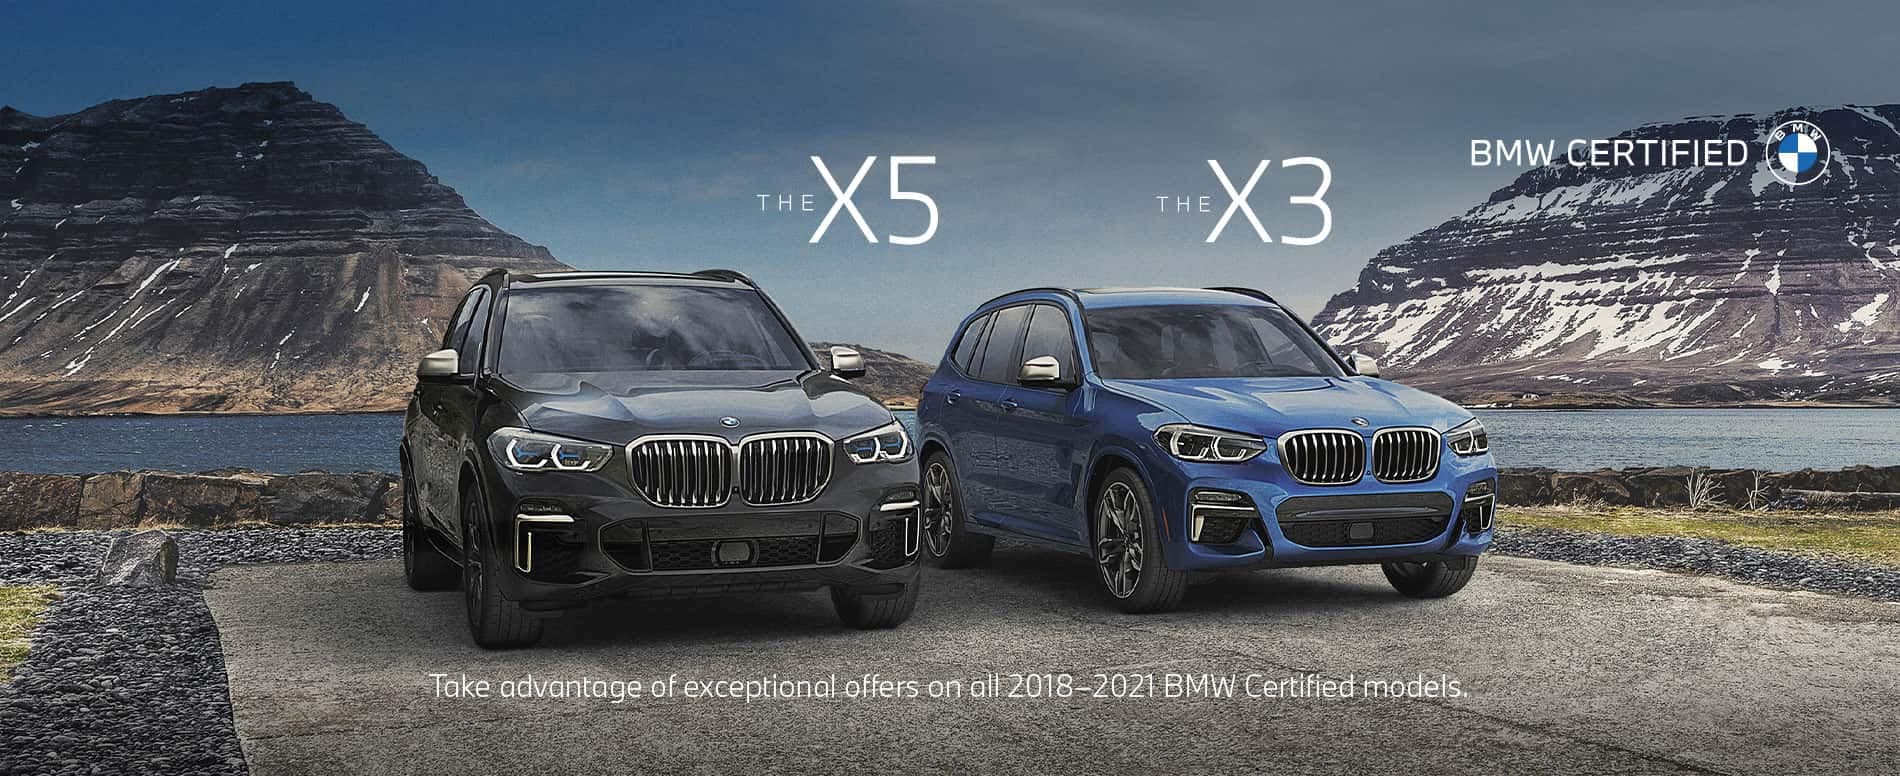 2020 BMW 4-Series